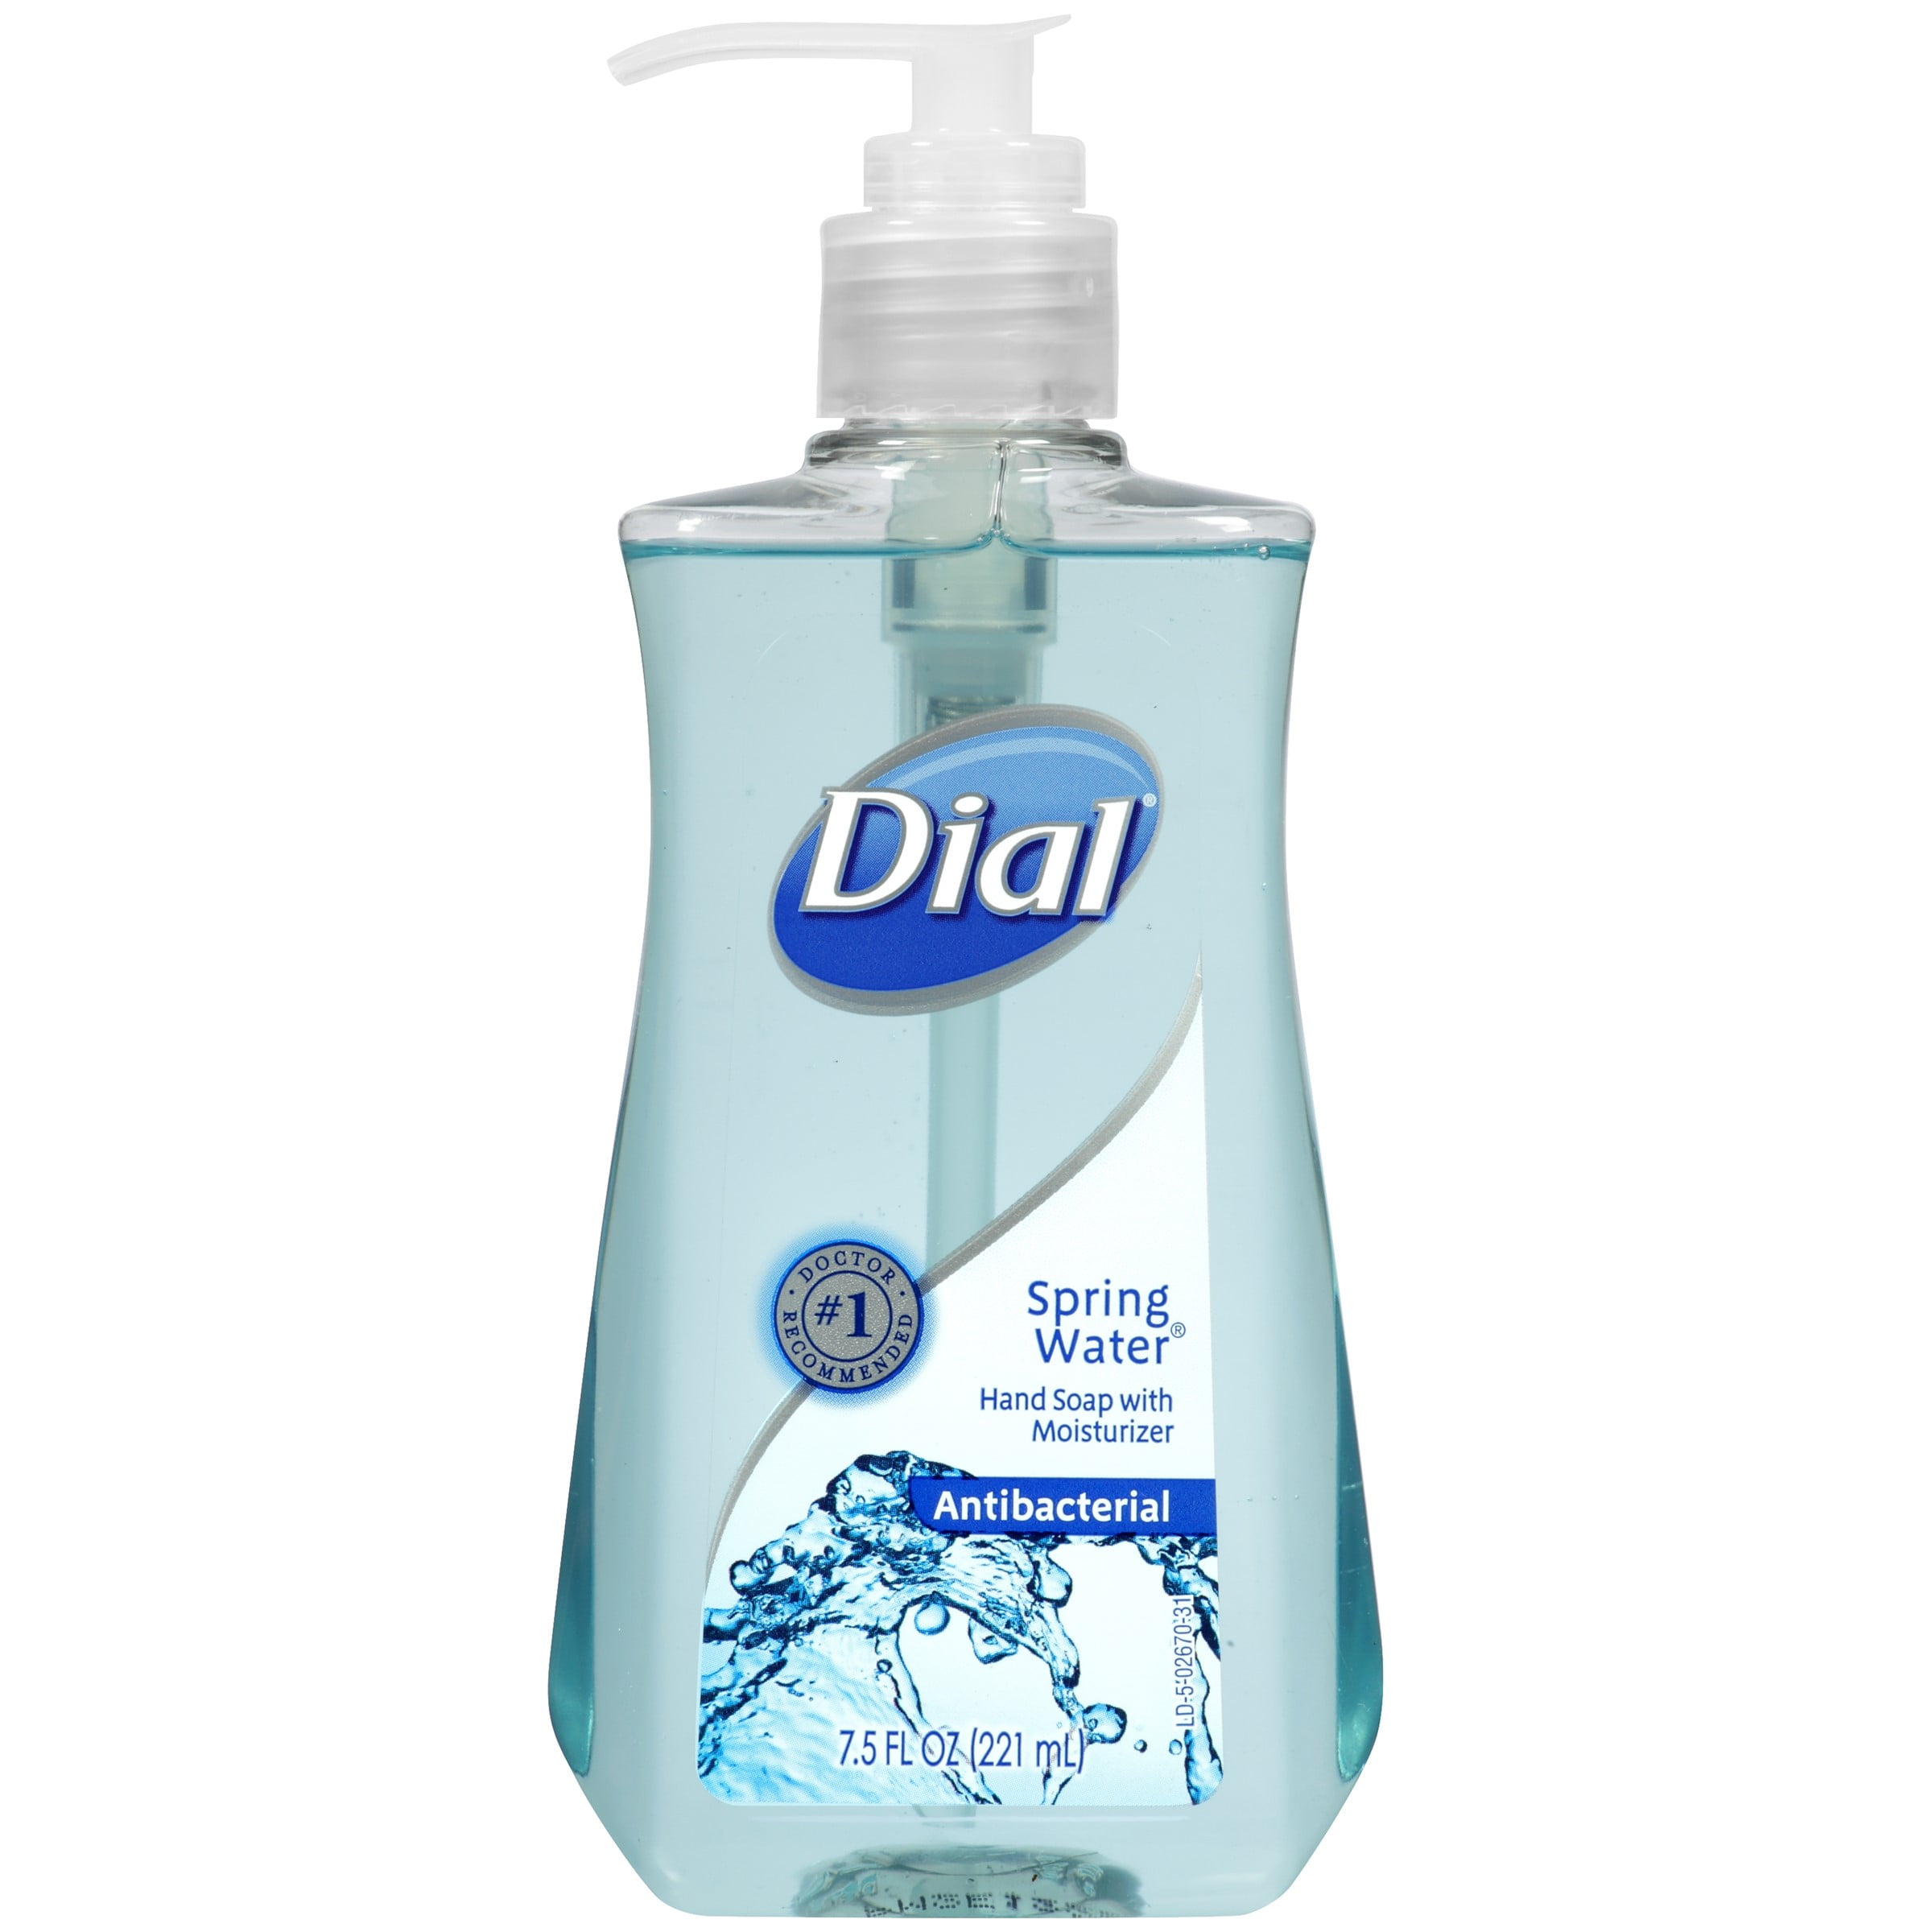 Dial Antibacterial Liquid Hand Soap, Spring Water, 7.5 Oz, 6 Pack